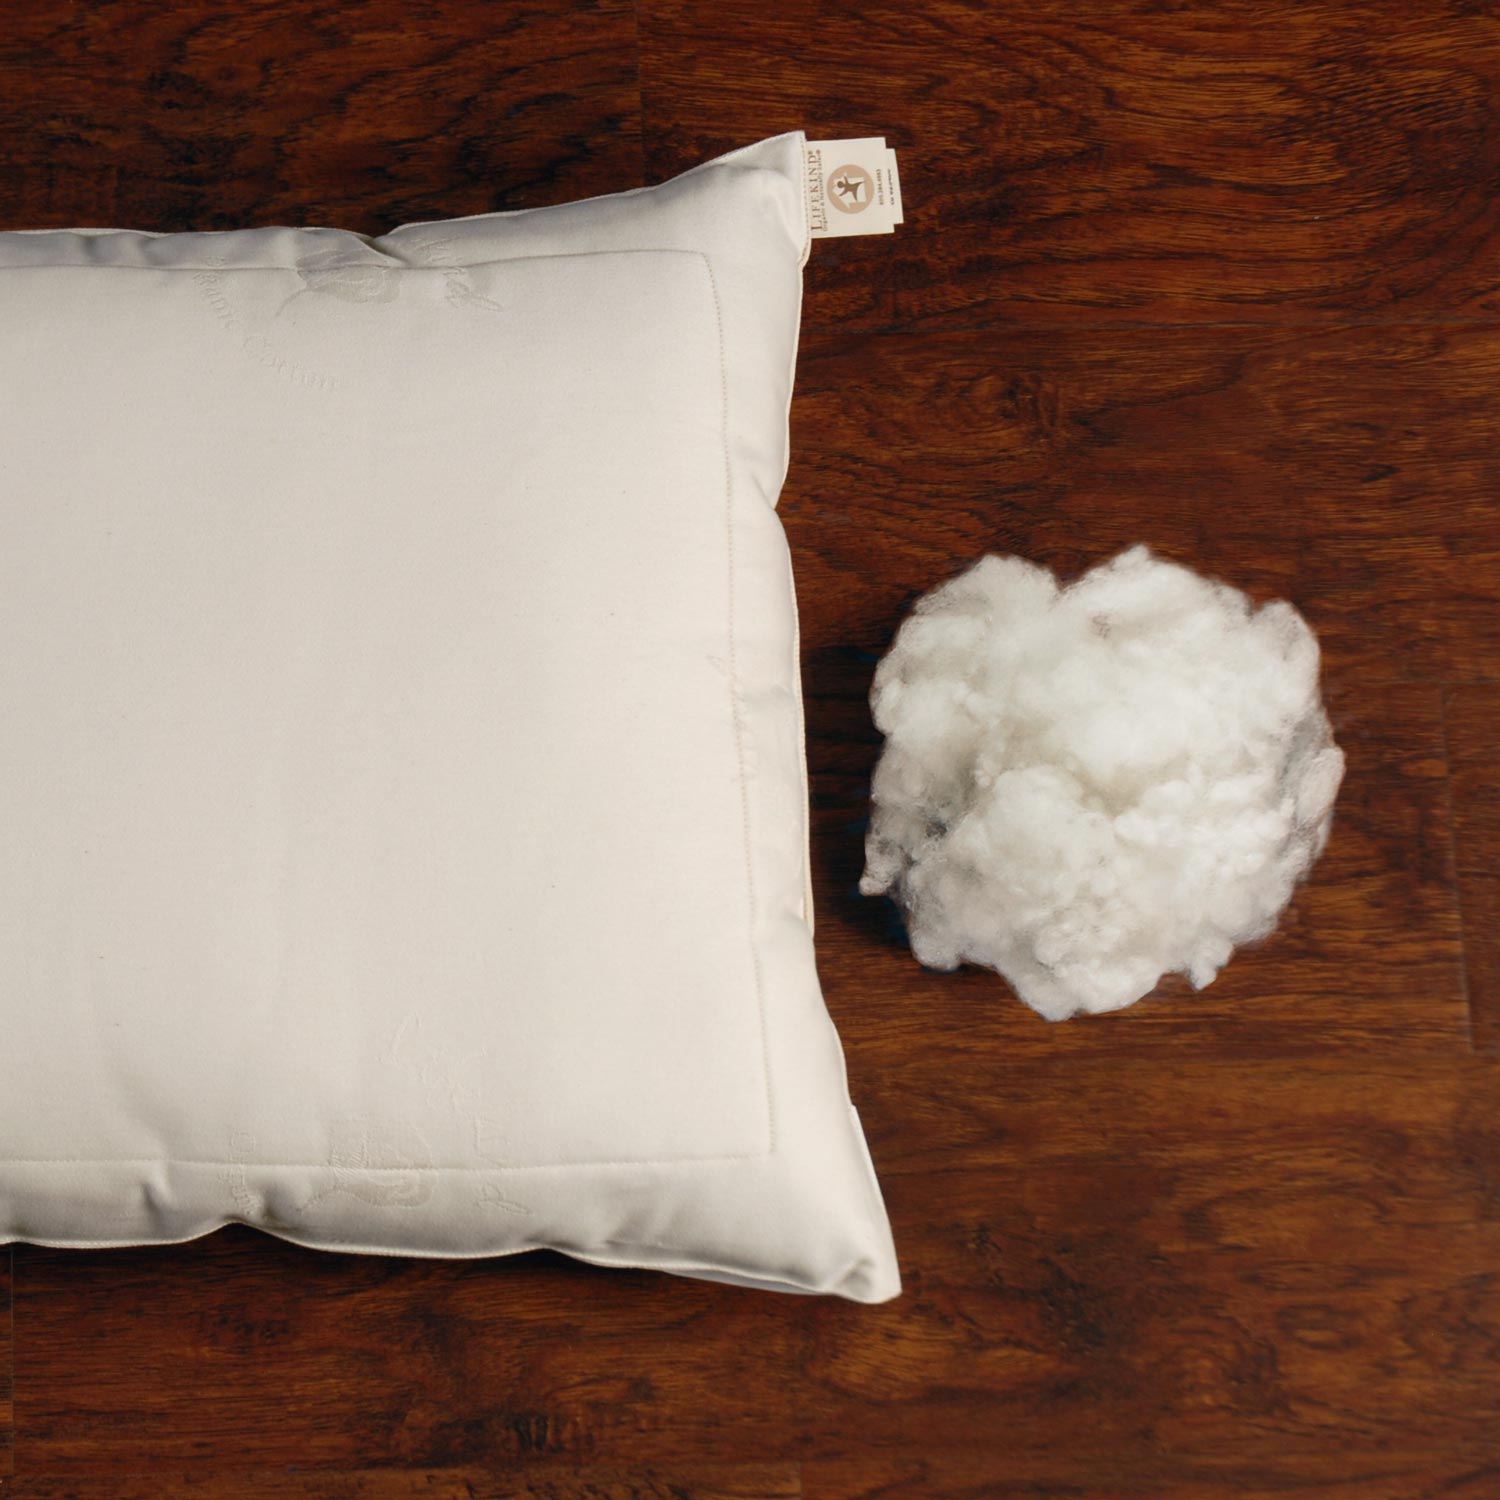 Organic Pillows: Natural, Certified Non-Toxic